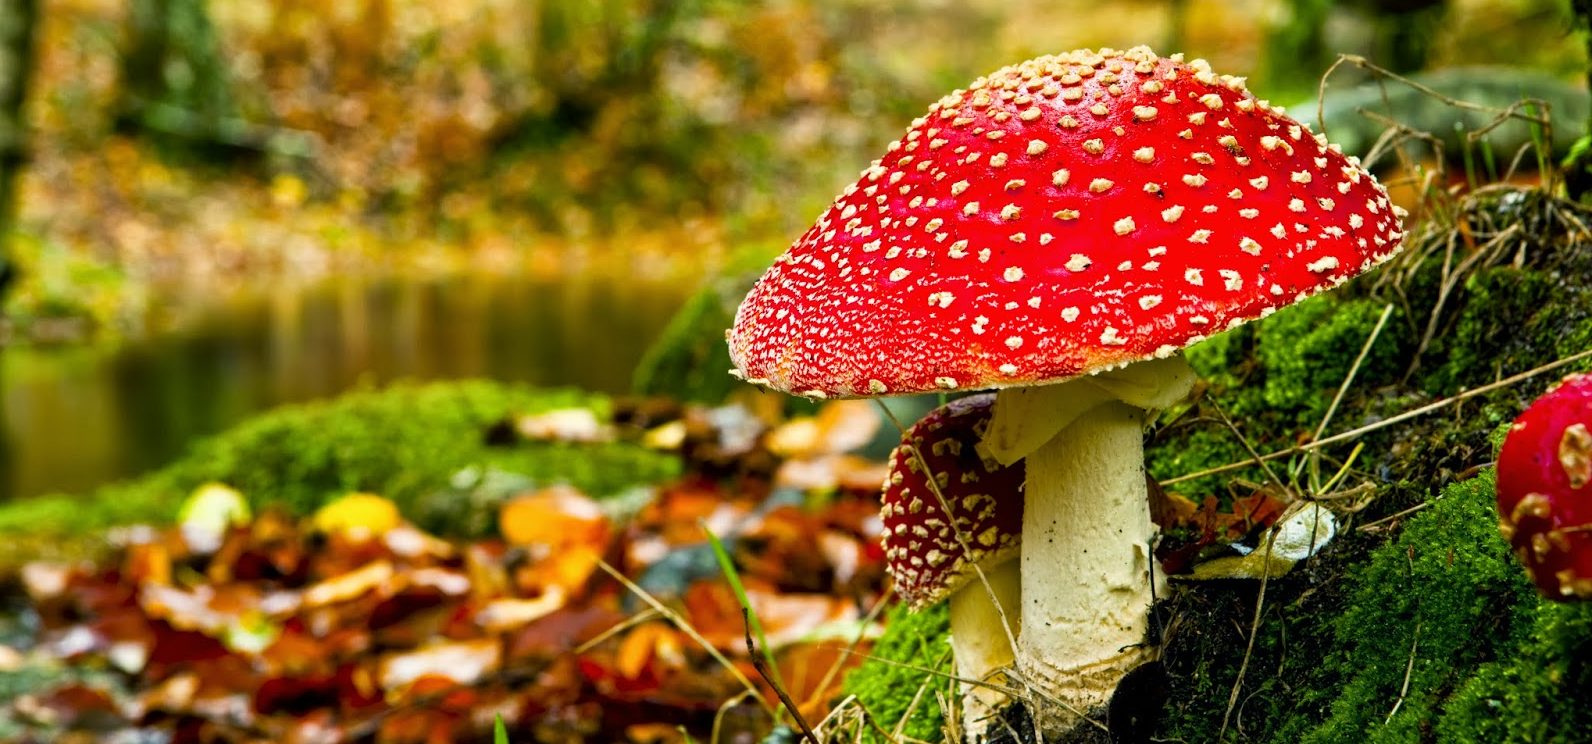 herfst-achtergrond-met-rode-paddenstoel-in-het-bos2